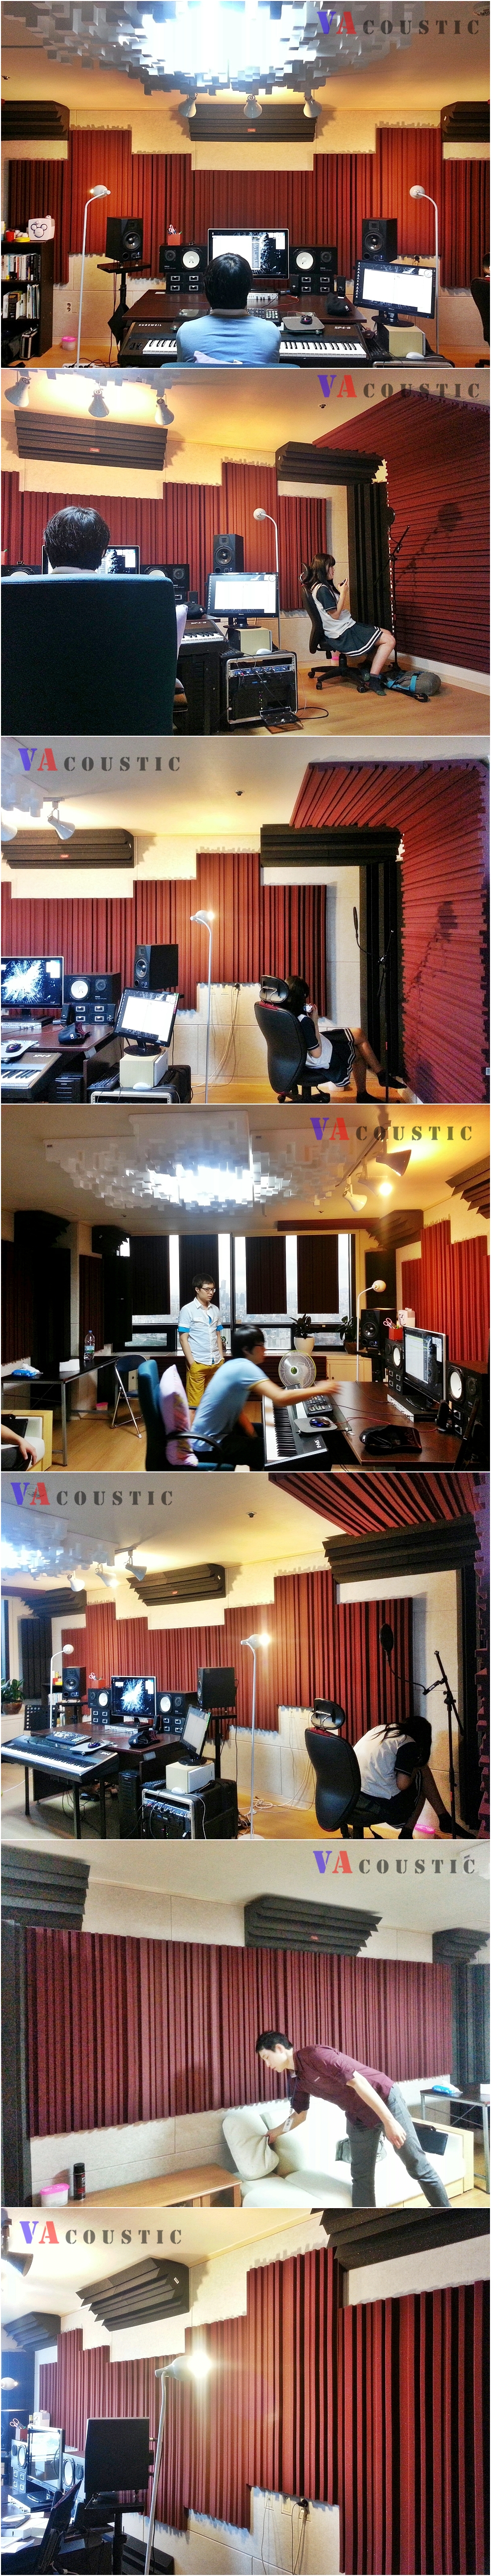 vacoustic_studio_setup_in_mokdong.jpg